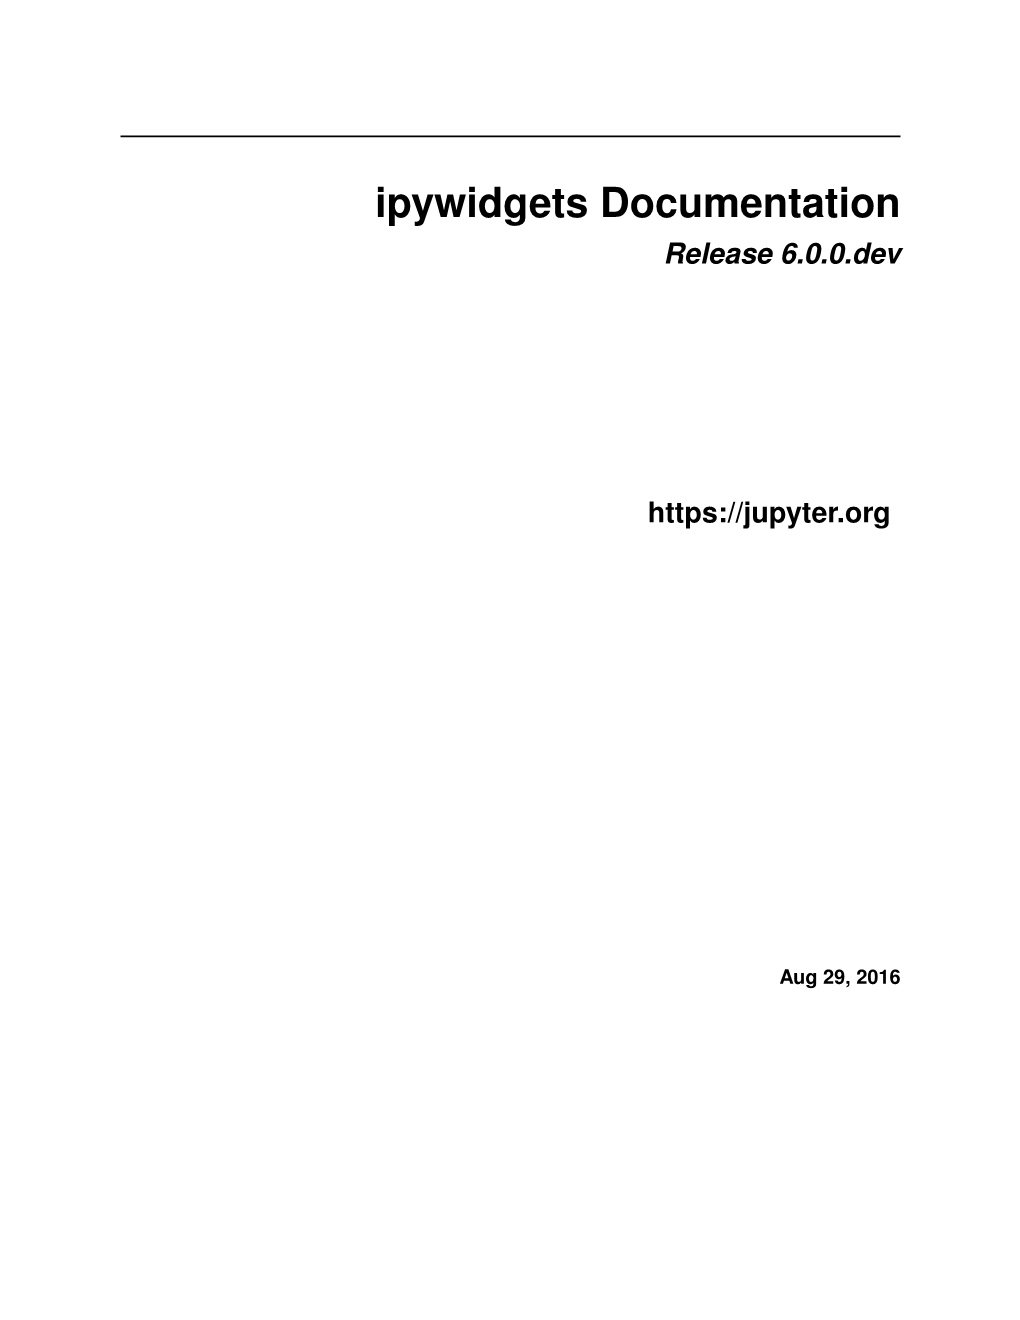 Ipywidgets Documentation Release 6.0.0.Dev